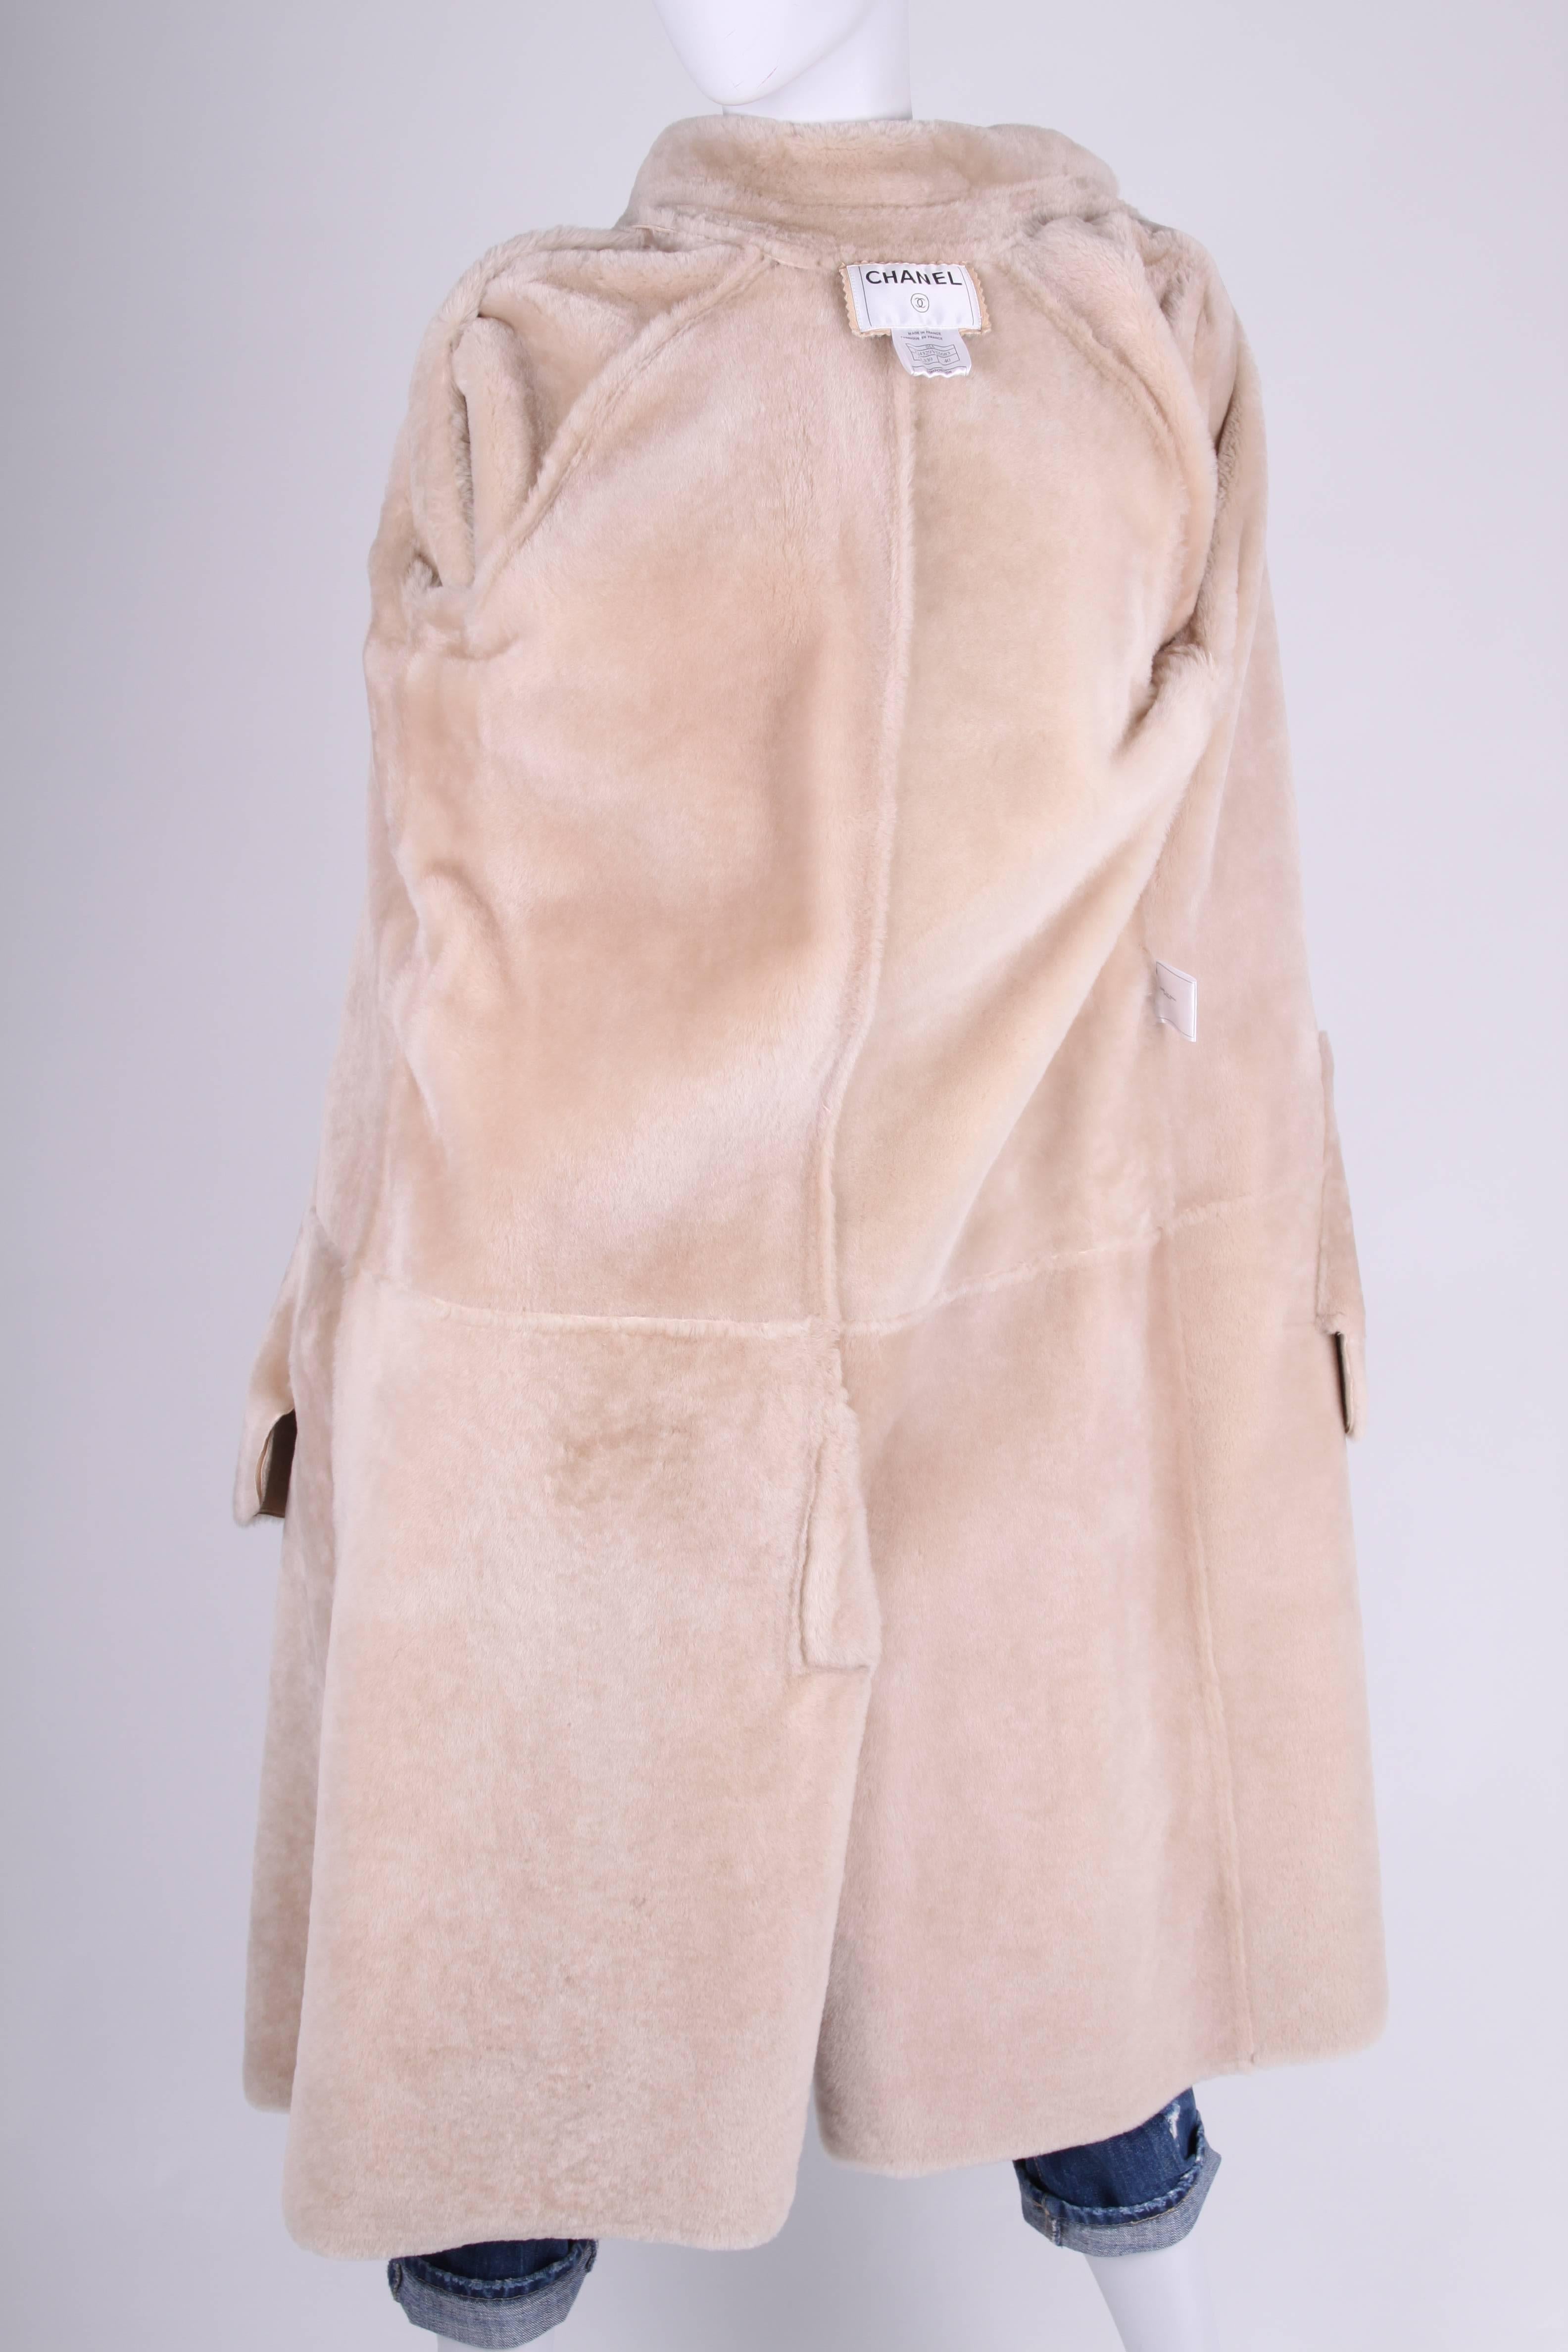 Men's Chanel Trenchcoat - beige lambskin leather